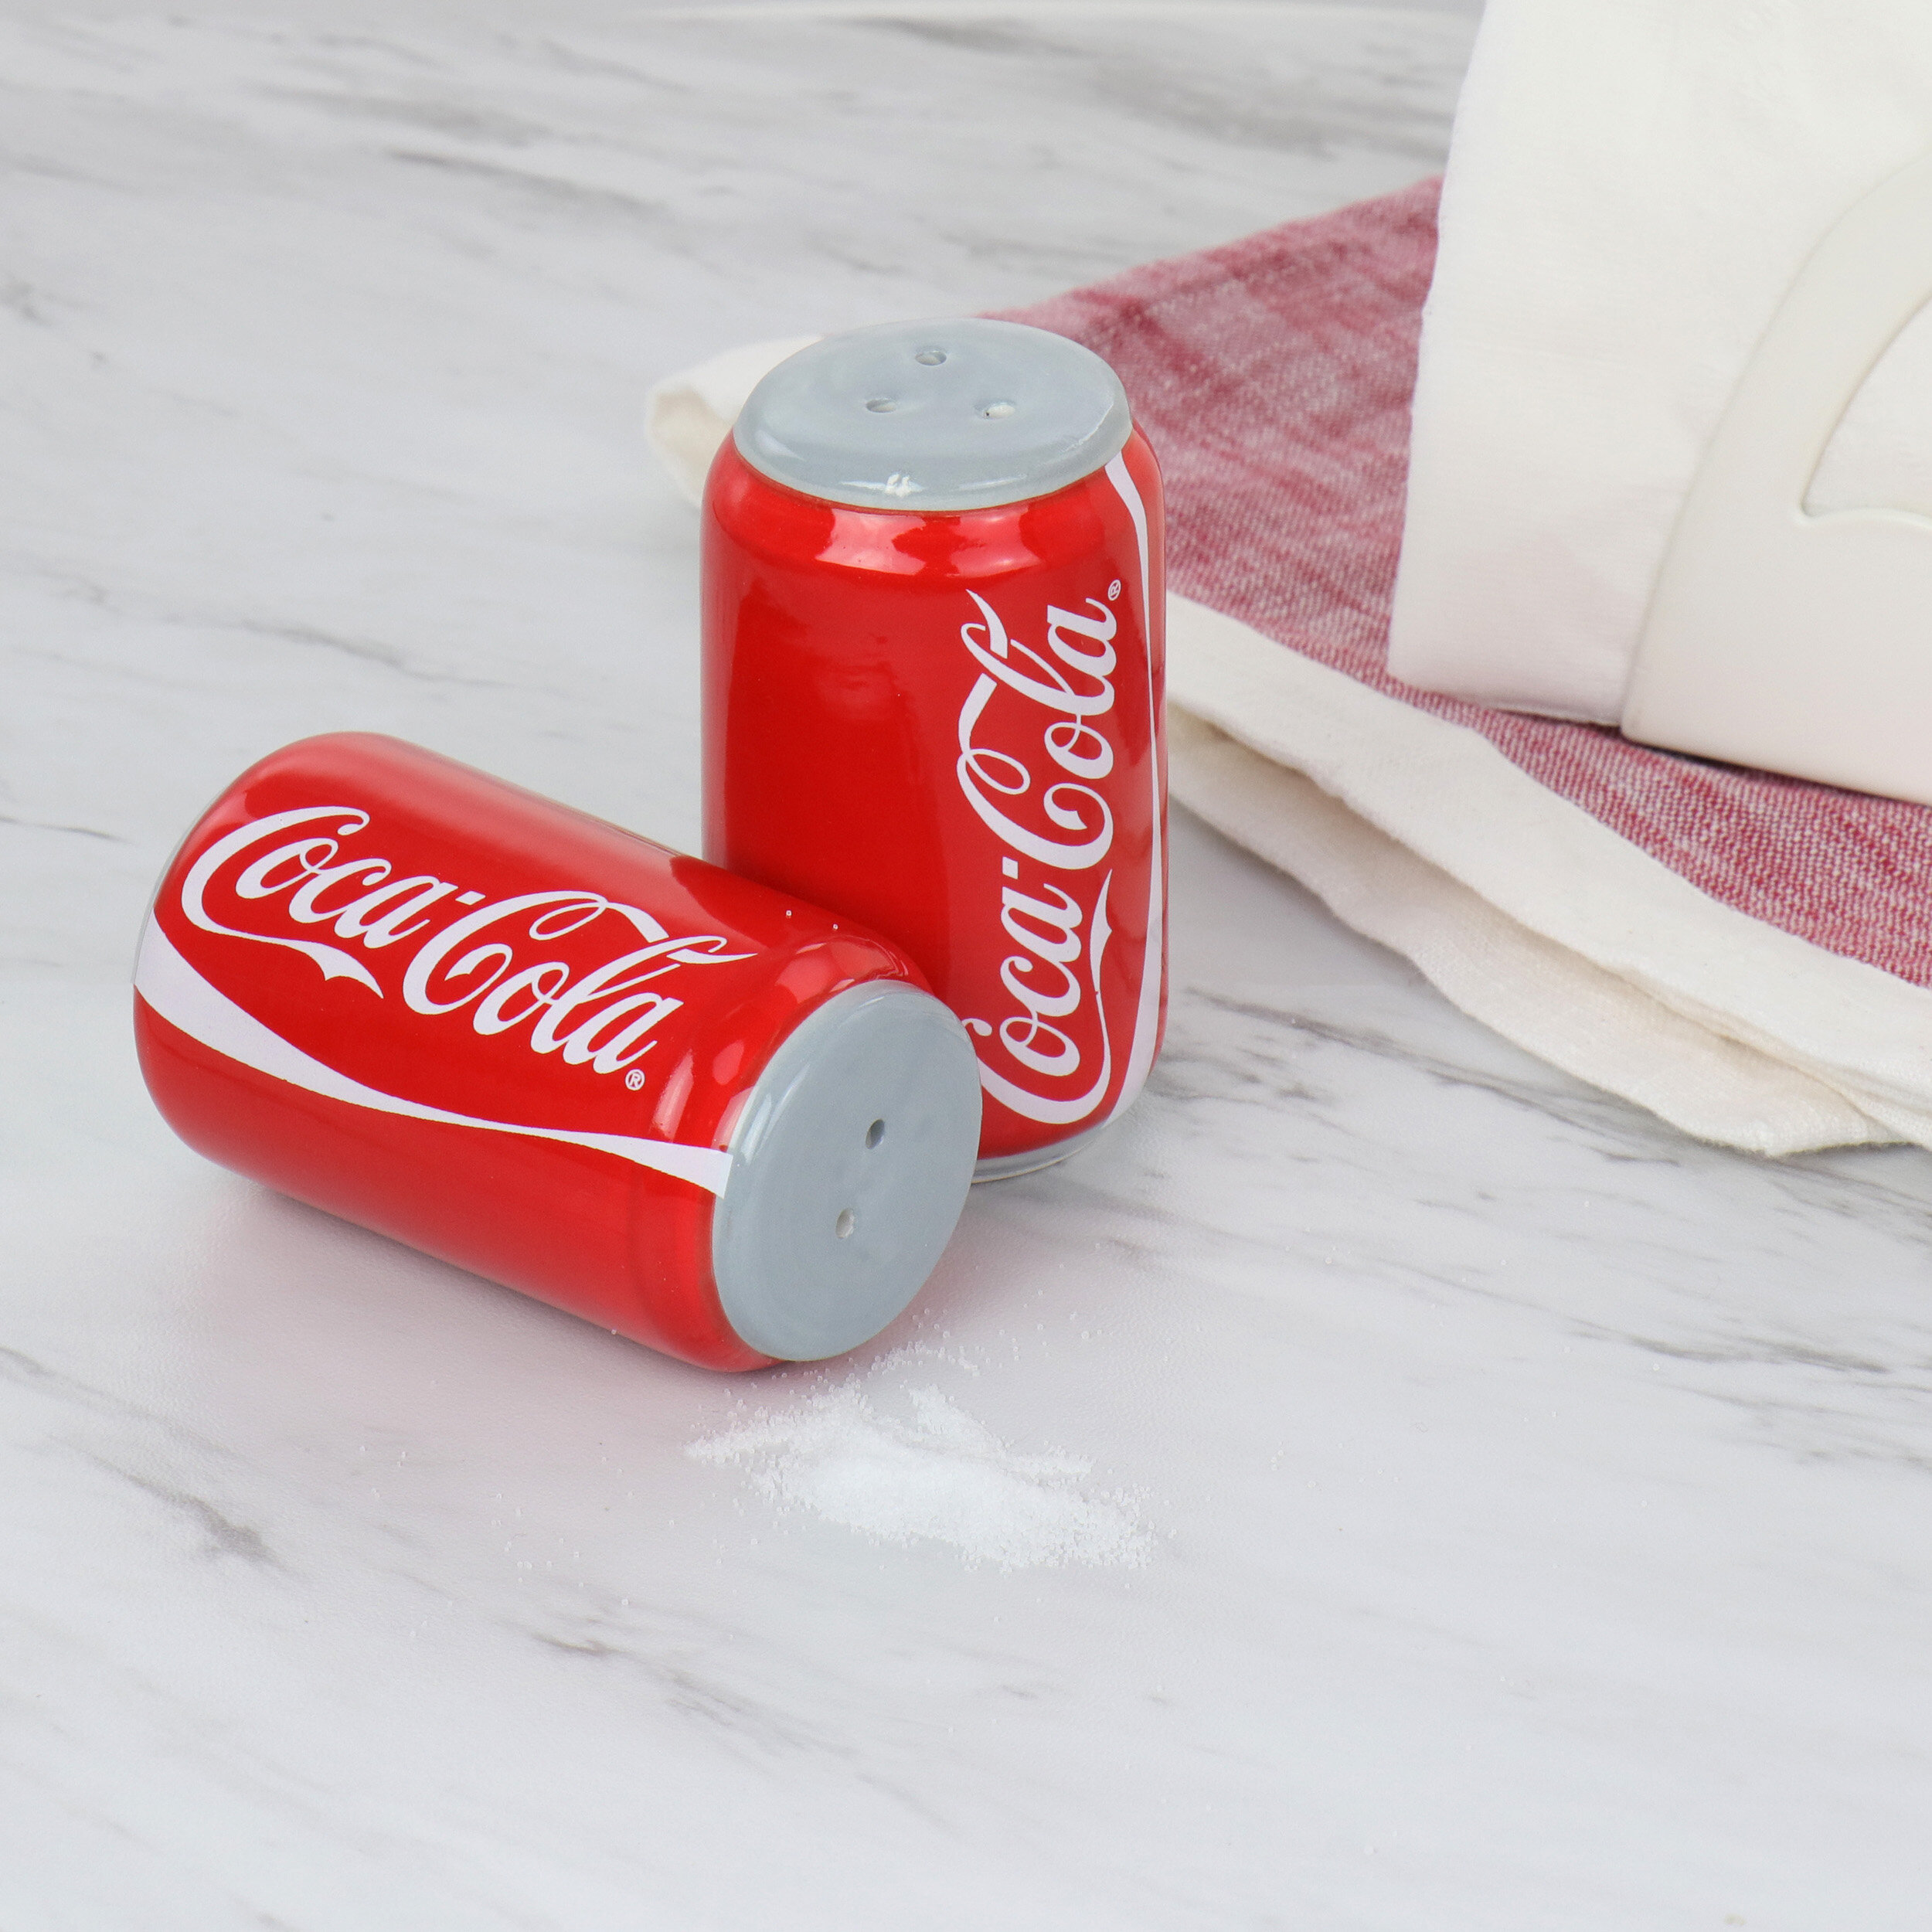 BRAND NEW Coca-Cola Enamel Ware Salt And Pepper Shaker Set Drink Coca-Cola